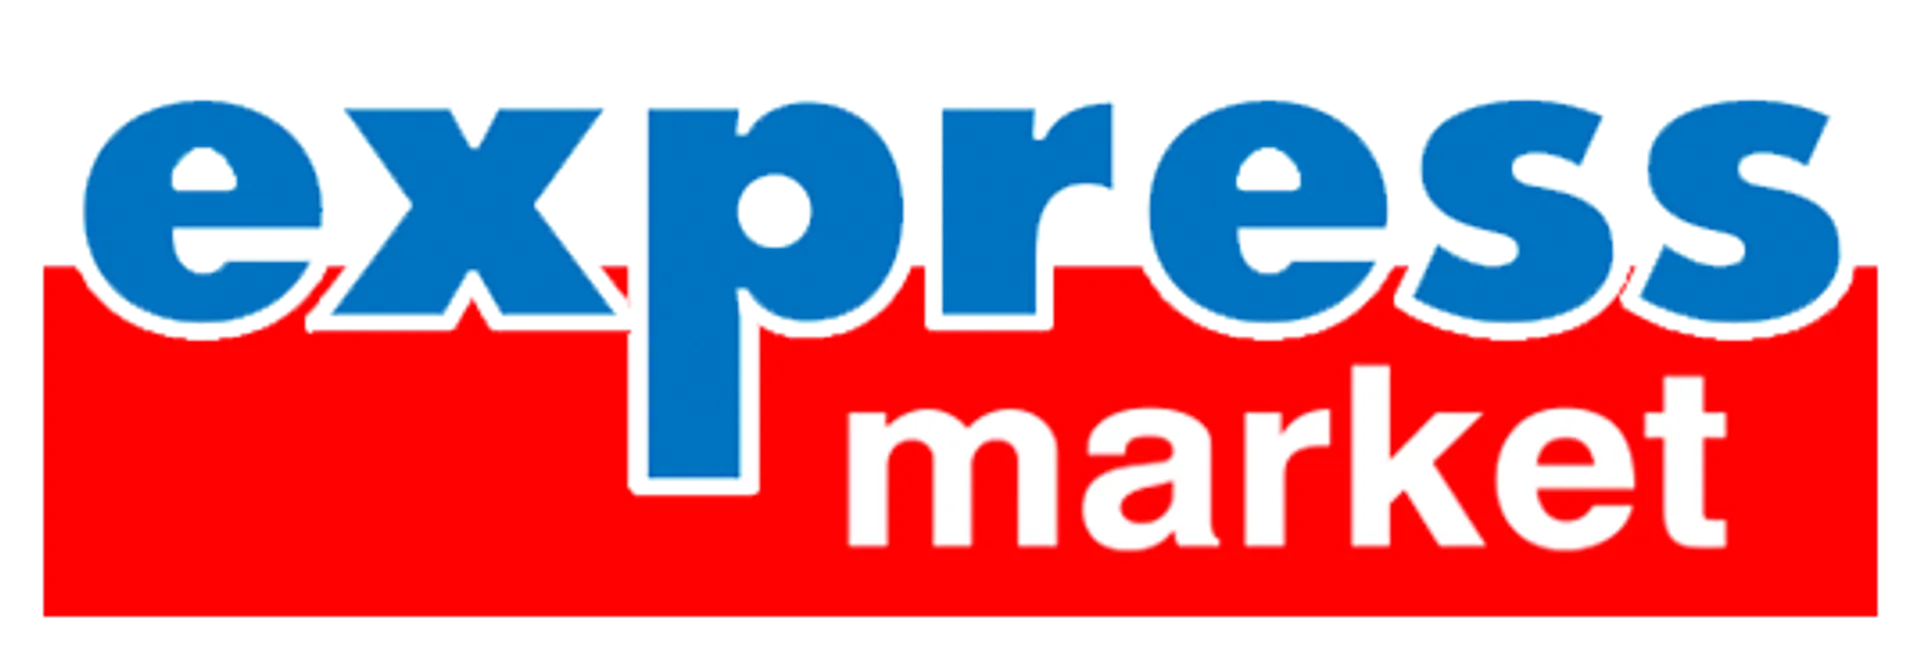 EXPRESS MARKET logo